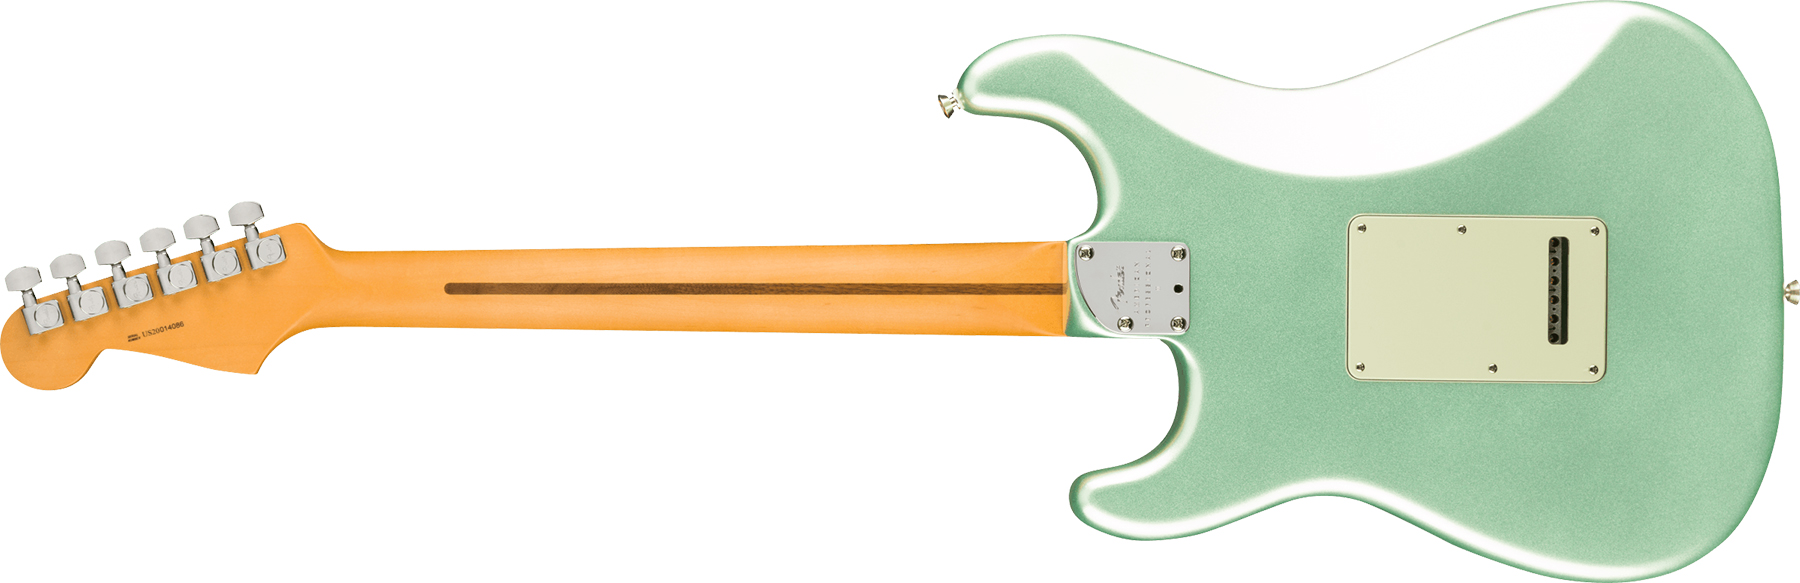 Fender Strat American Professional Ii Usa Mn - Mystic Surf Green - Str shape electric guitar - Variation 1